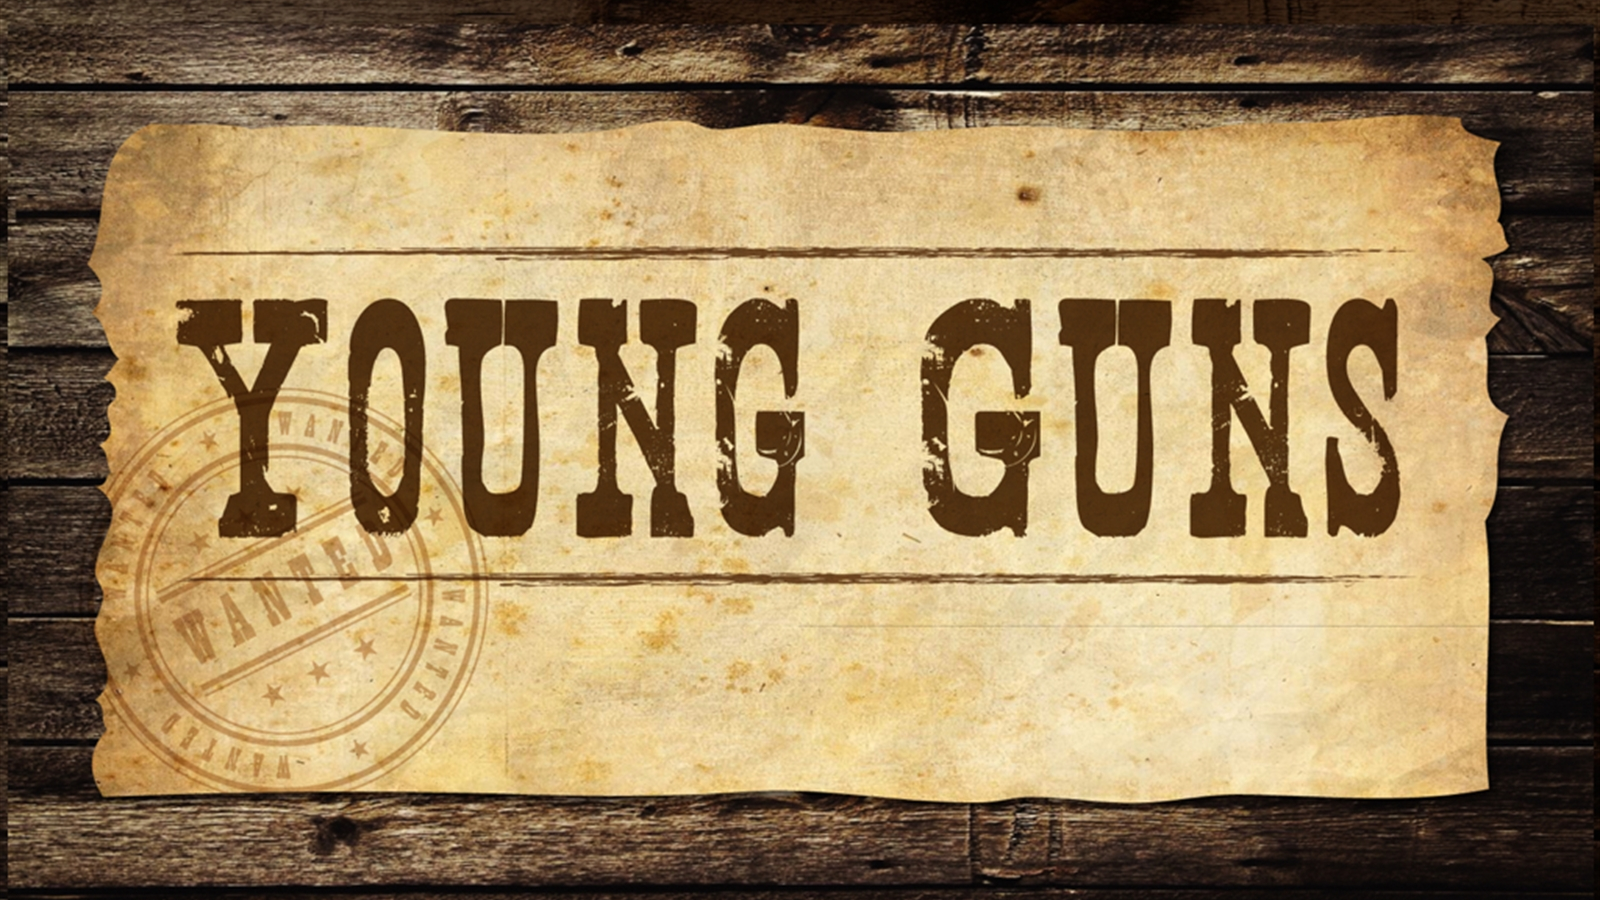 Message Series: Young Guns